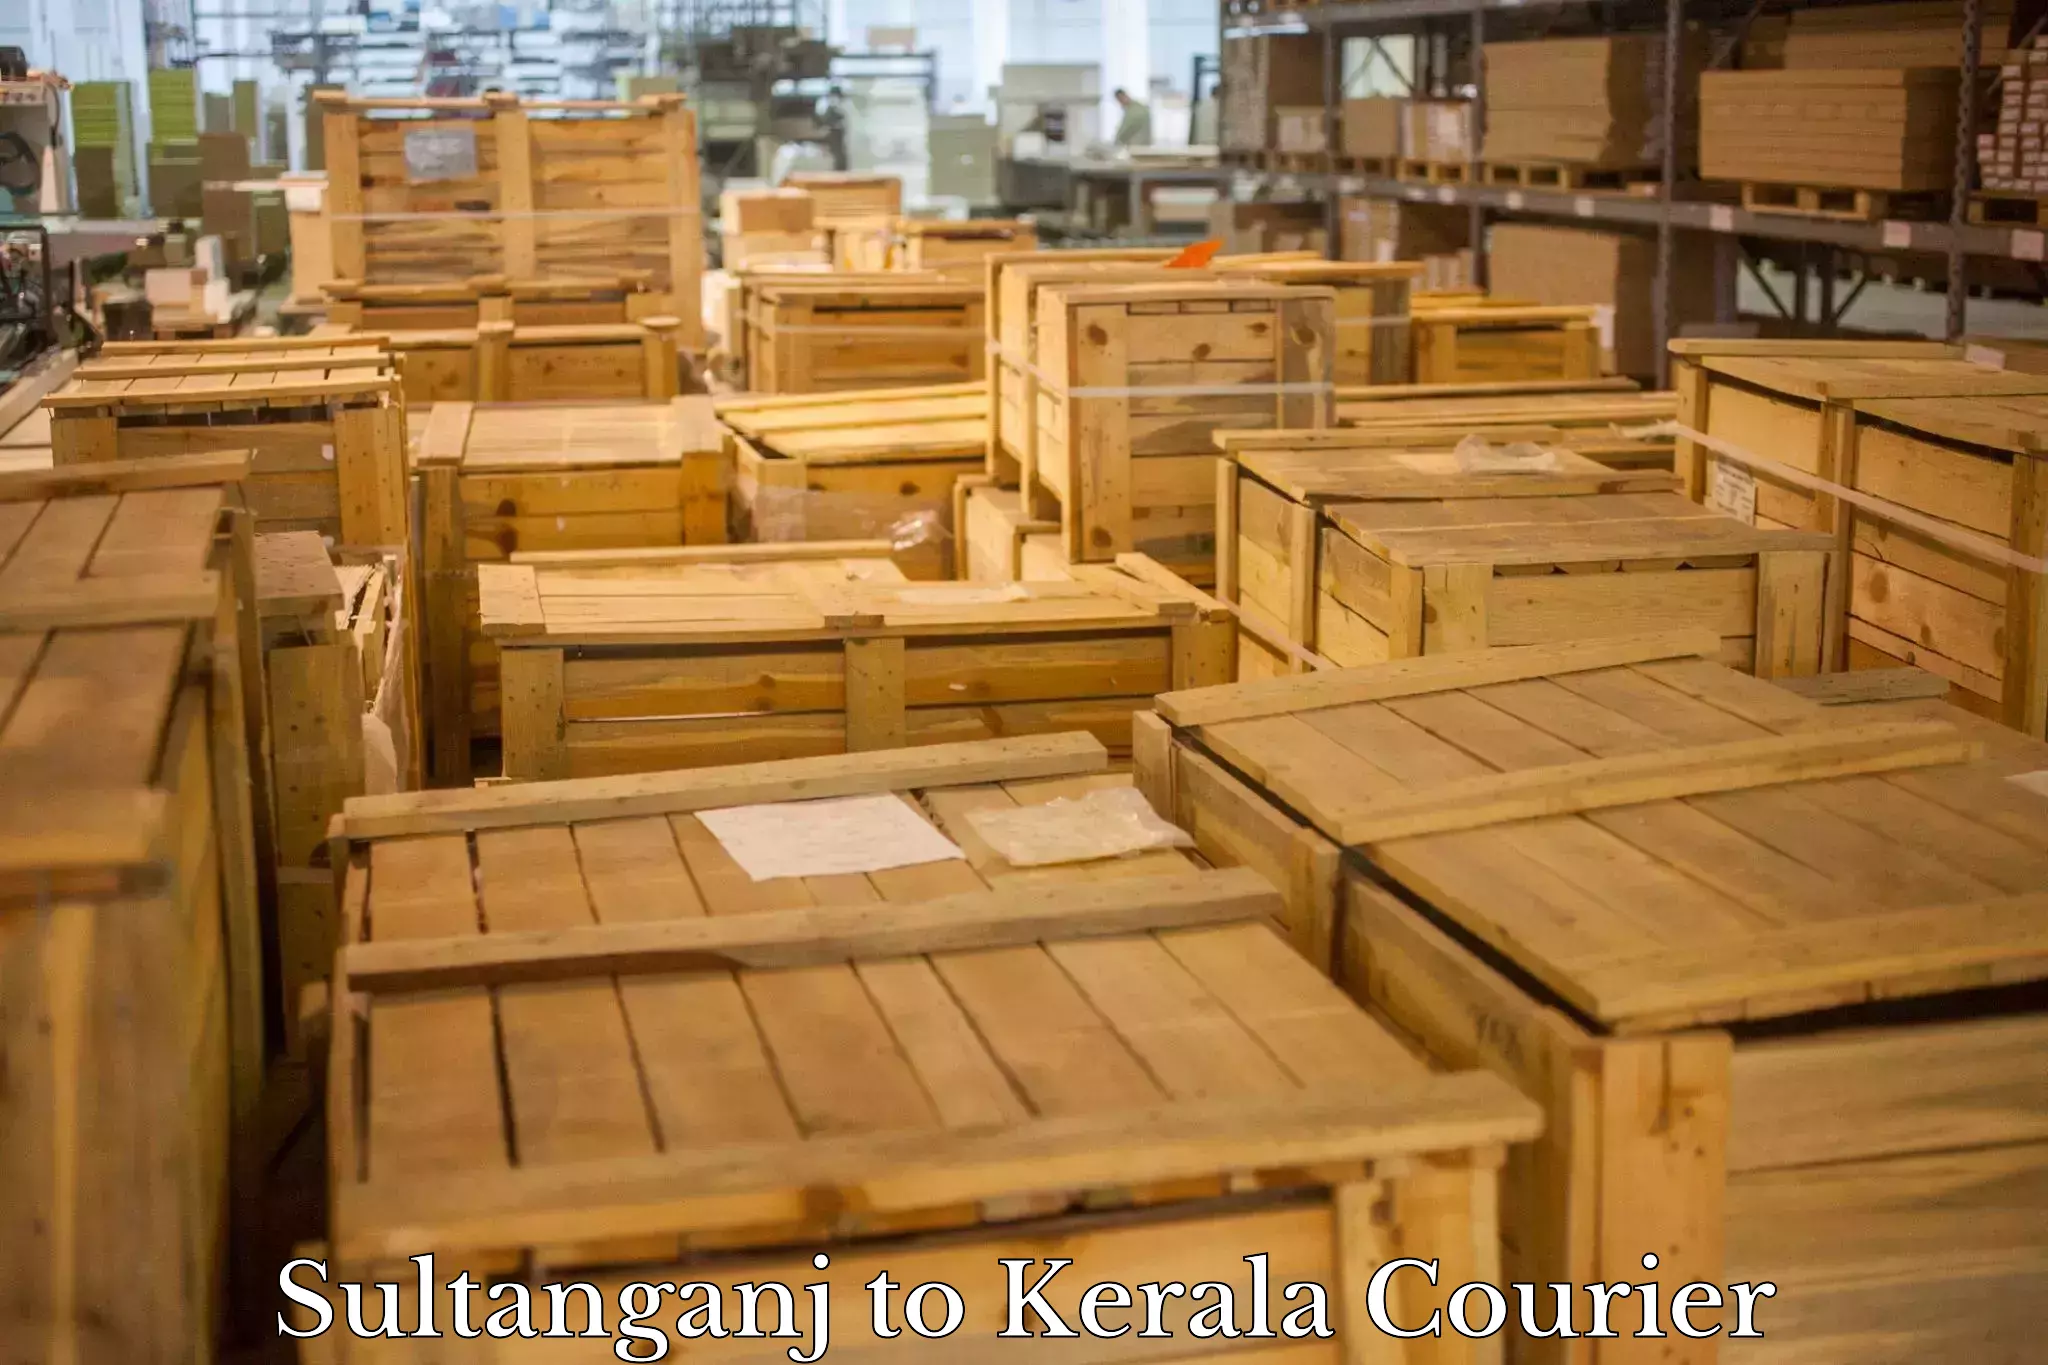 Global shipping networks Sultanganj to Kerala